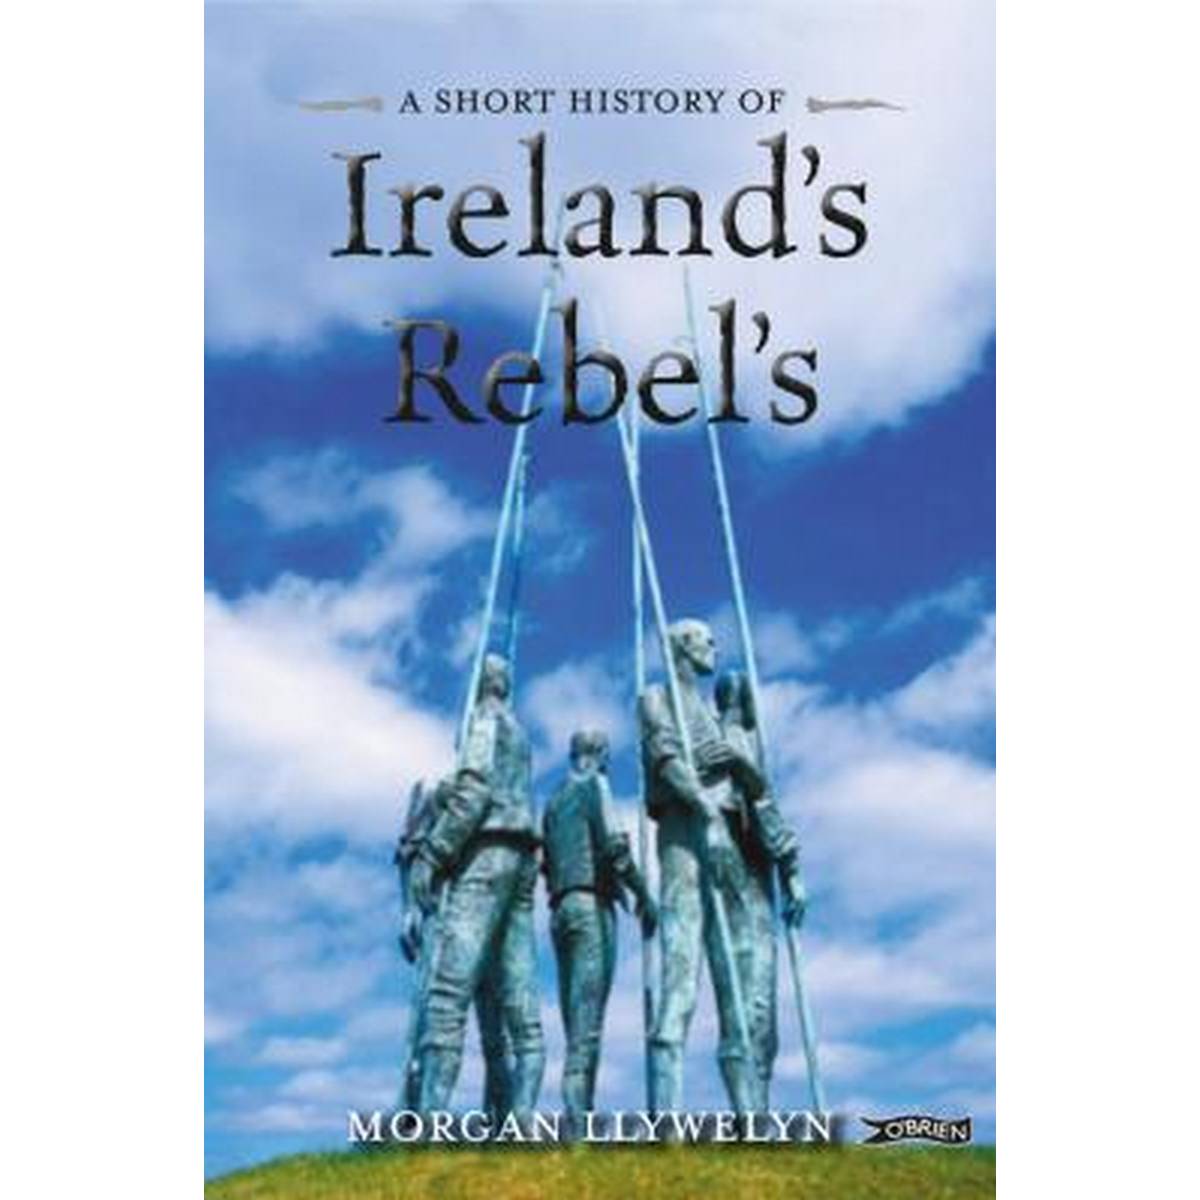 A Short History of Ireland's Rebels